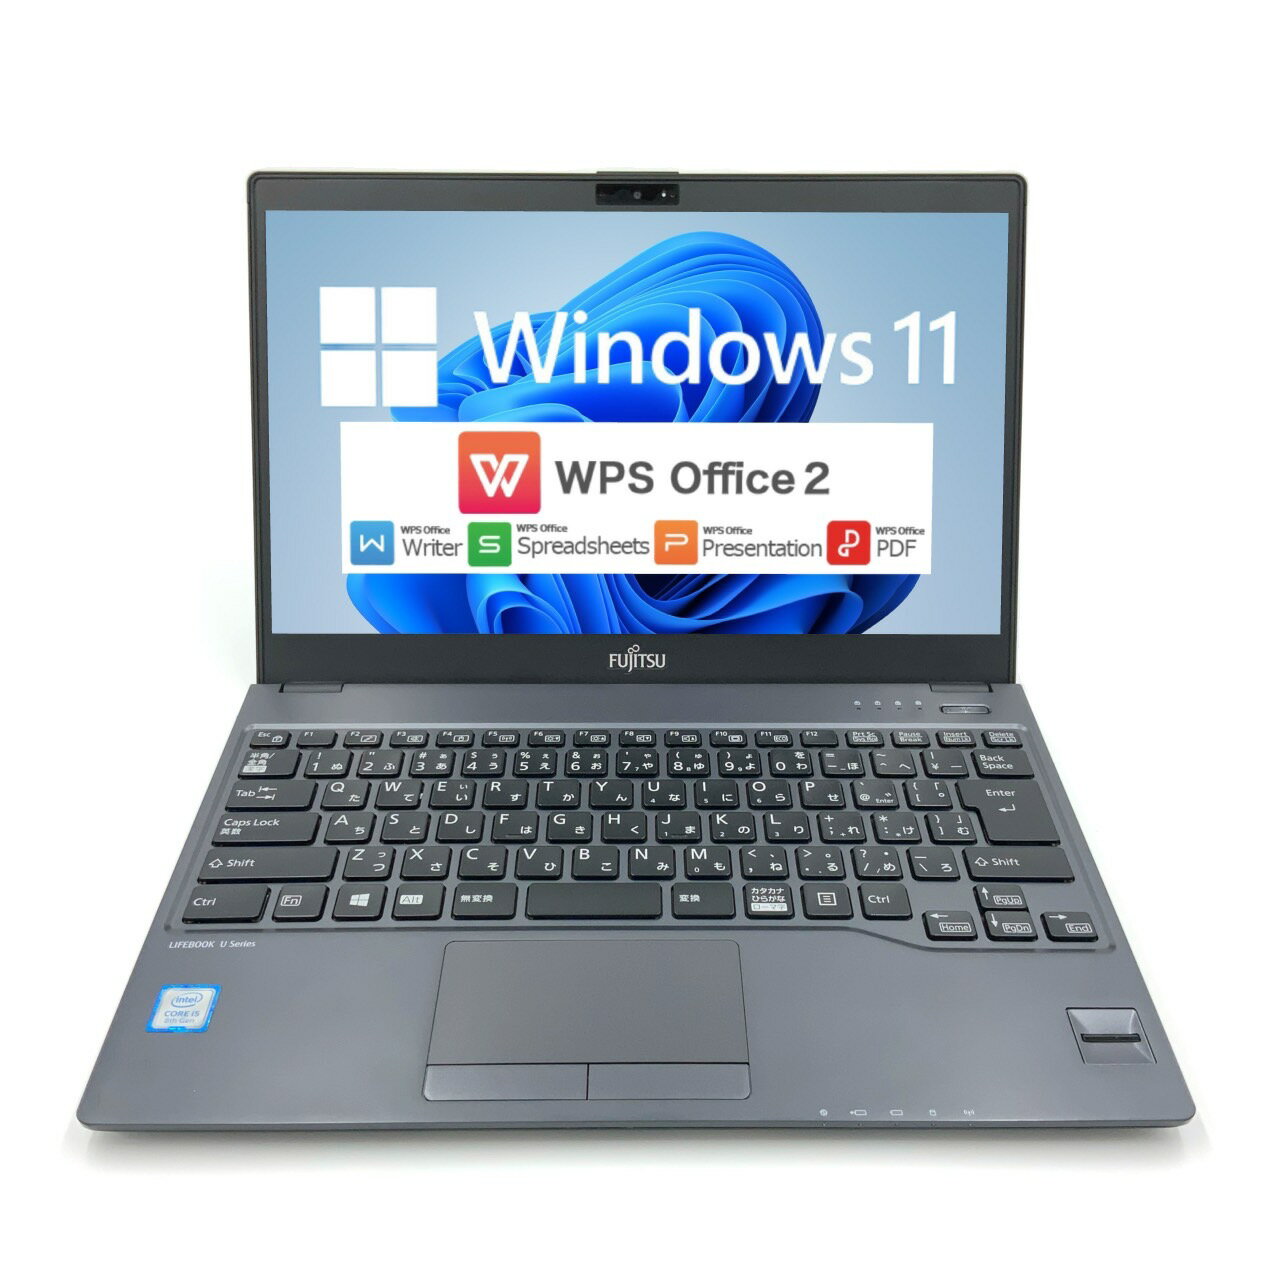 【Windows11】 【軽量ノート799g】 FUJITSU LIFEBOOK U938 第8世代 Core i5 8250U 20GB 新品SSD480GB 無線LAN フルHD 64bit WPS Office 13.3インチ 中古パソコン ノートパソコン Notebook 【中古】